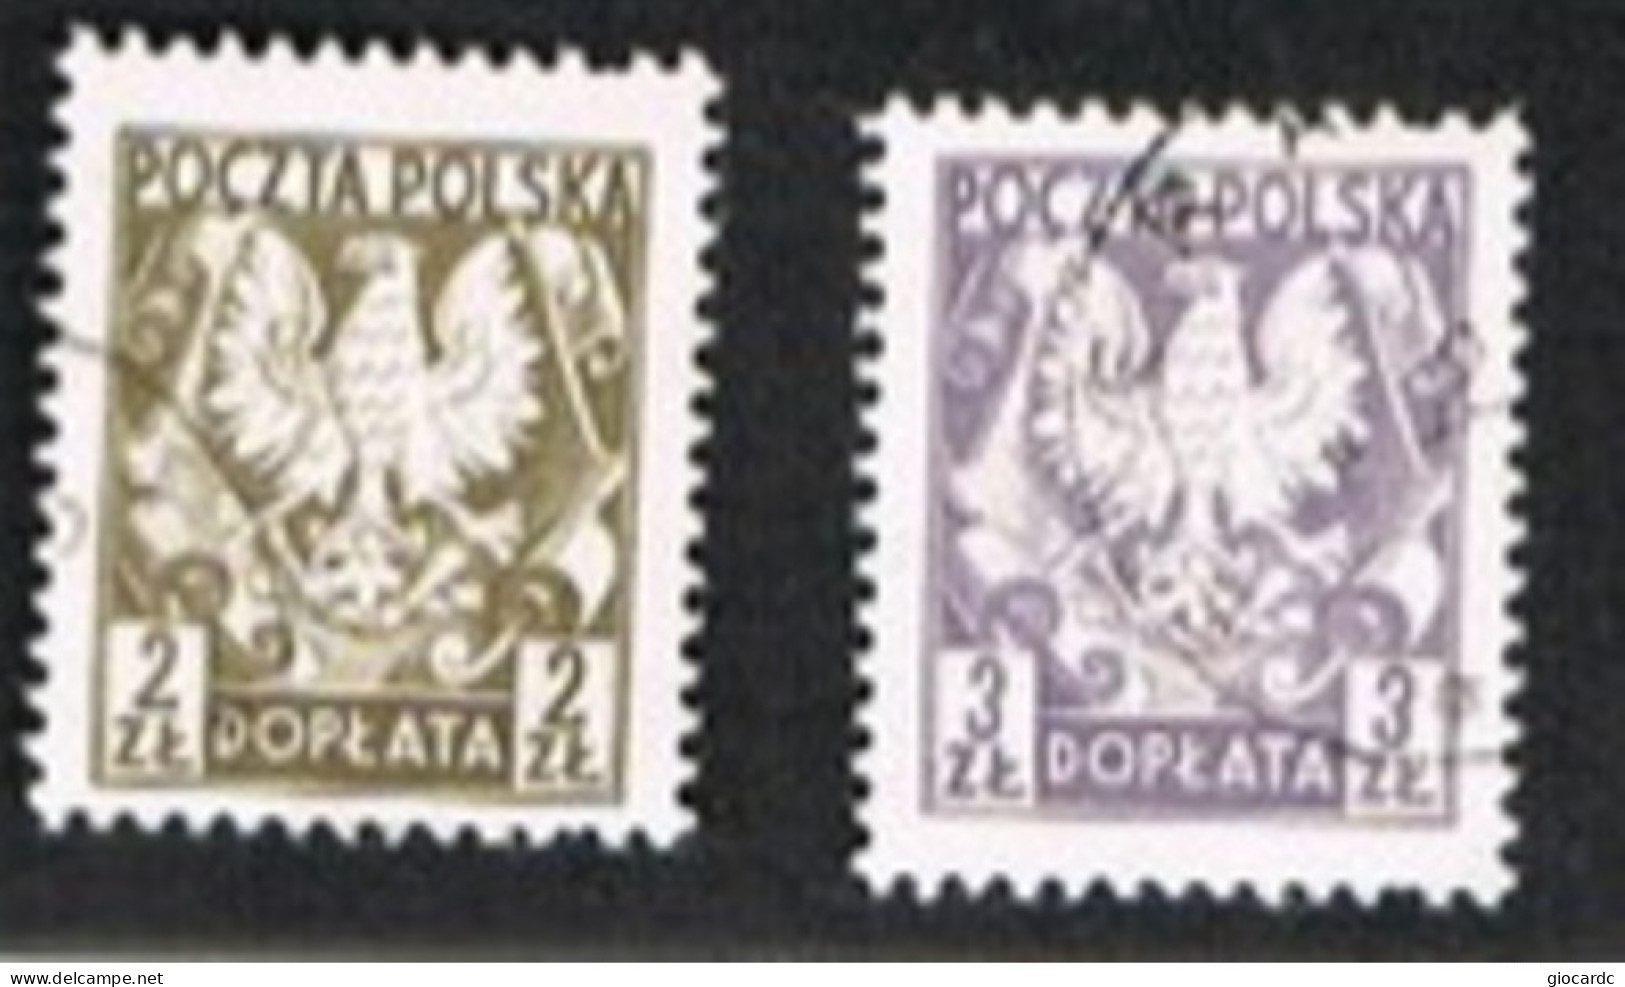 POLONIA (POLAND)   -  SG D2699.2701  - 1980 POSTAGE DUE: EAGLE      -    USED - Taxe